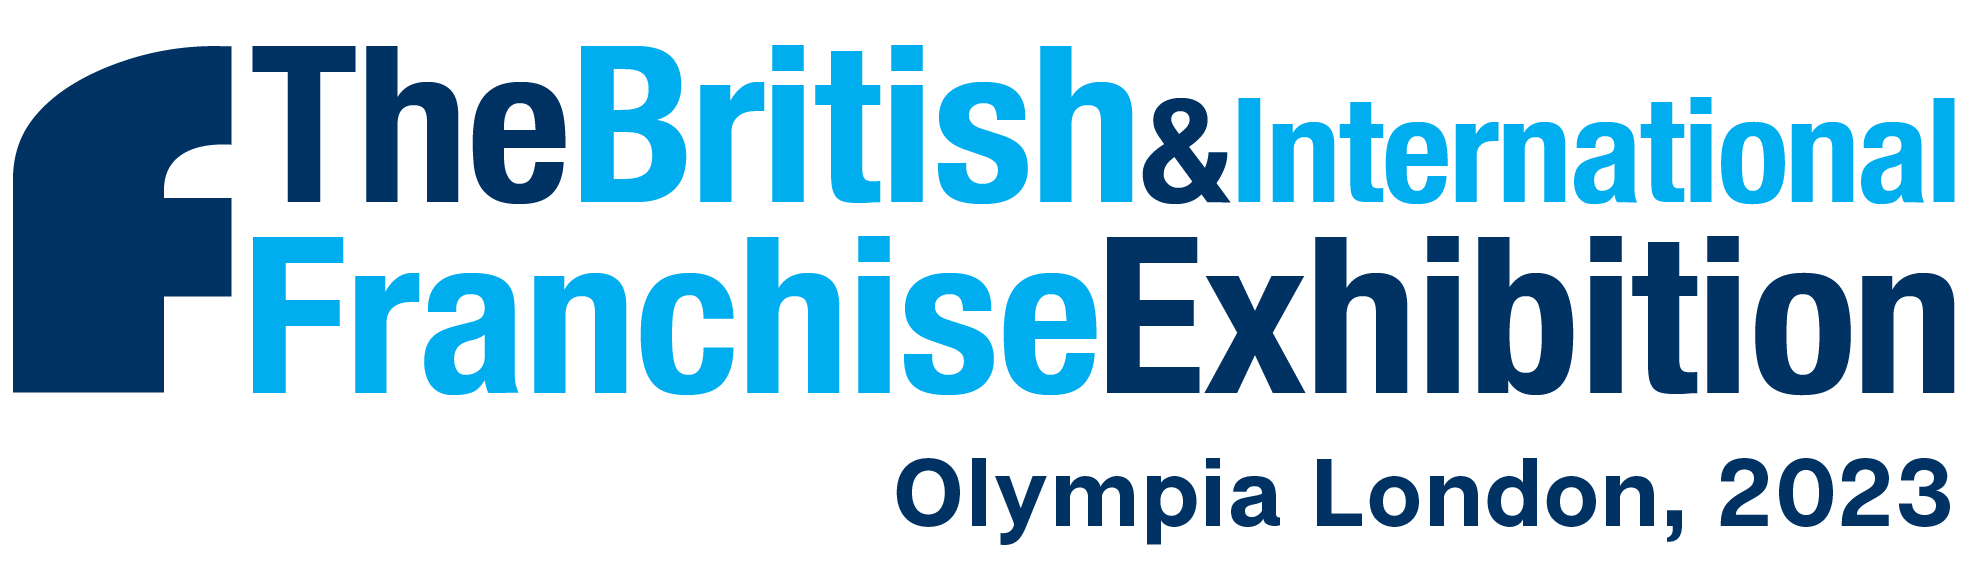 The British & International Franchise Exhibition 2022 